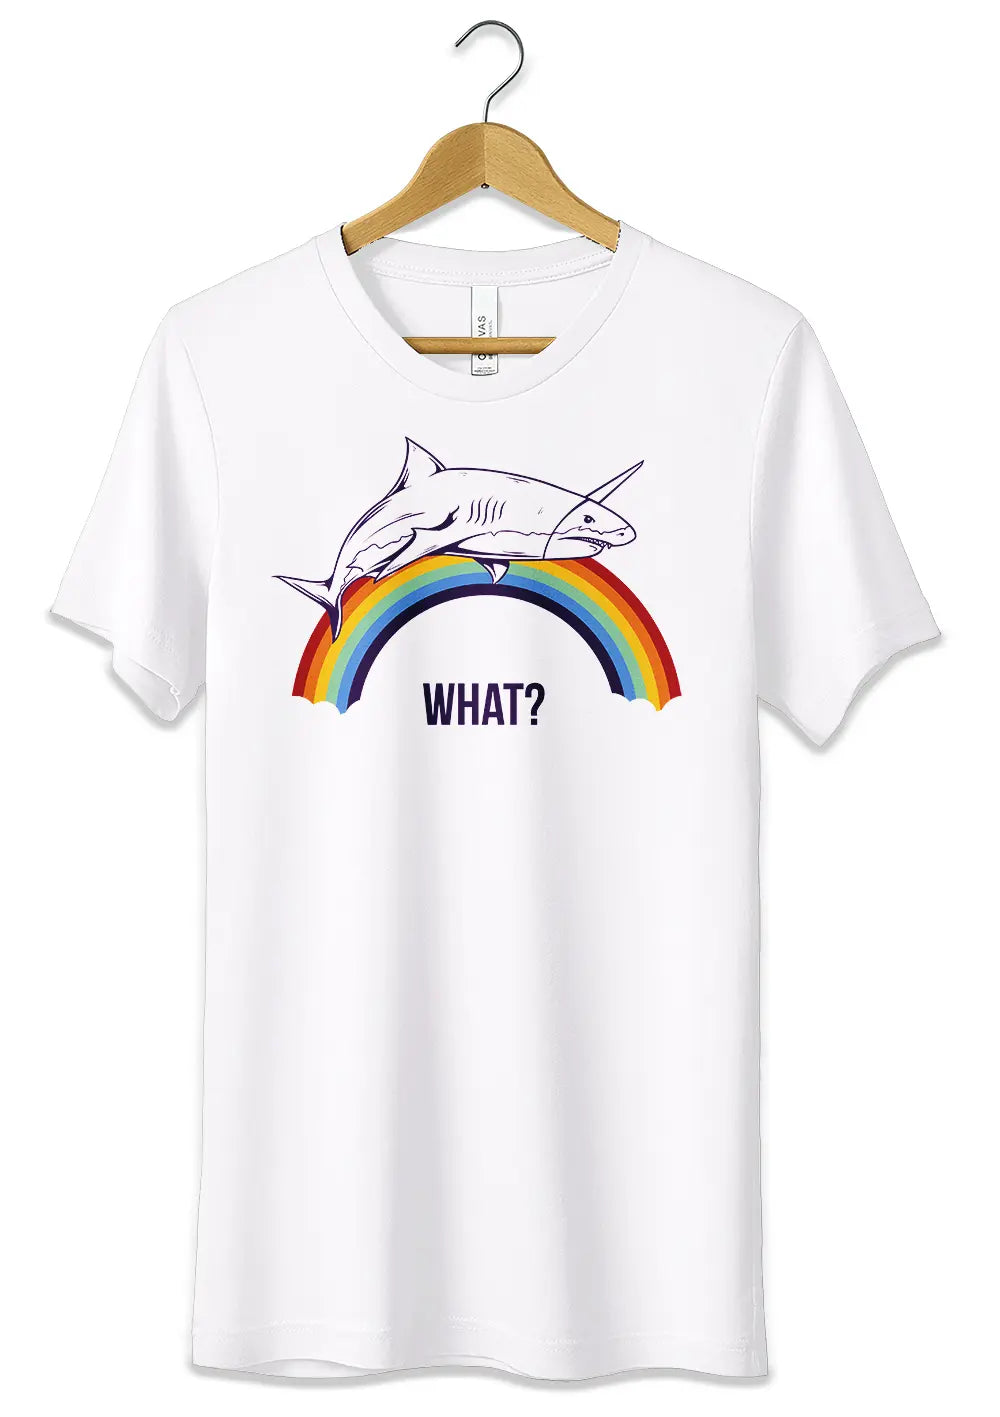 T-Shirt Maglietta Divertente What? Squalo Arcobaleno Unicorno, CmrDesignStore, T-Shirt, t-shirt-maglietta-divertente-what-squalo-arcobaleno-unicorno, CmrDesignStore